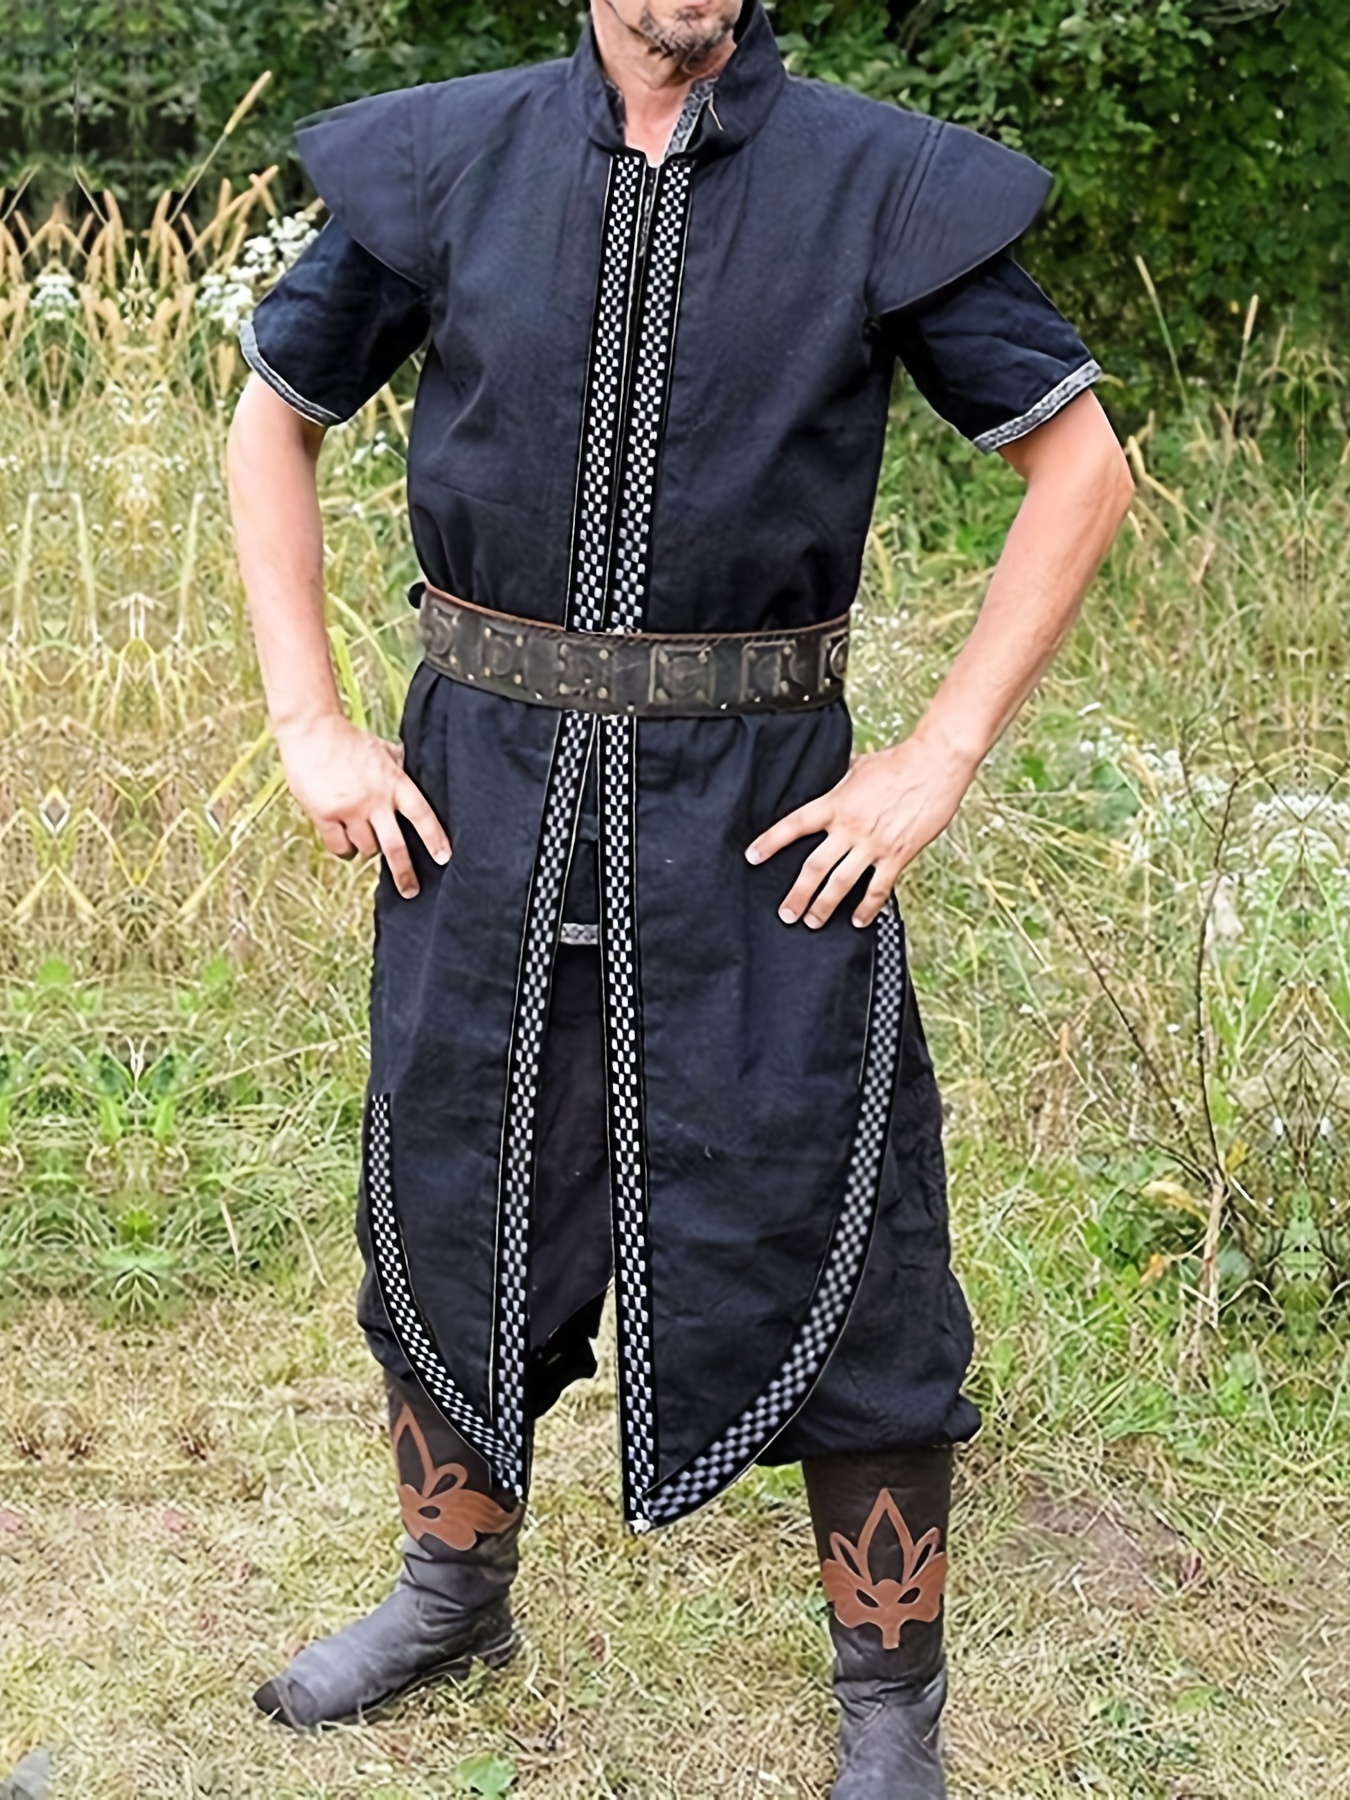 medieval men clothing